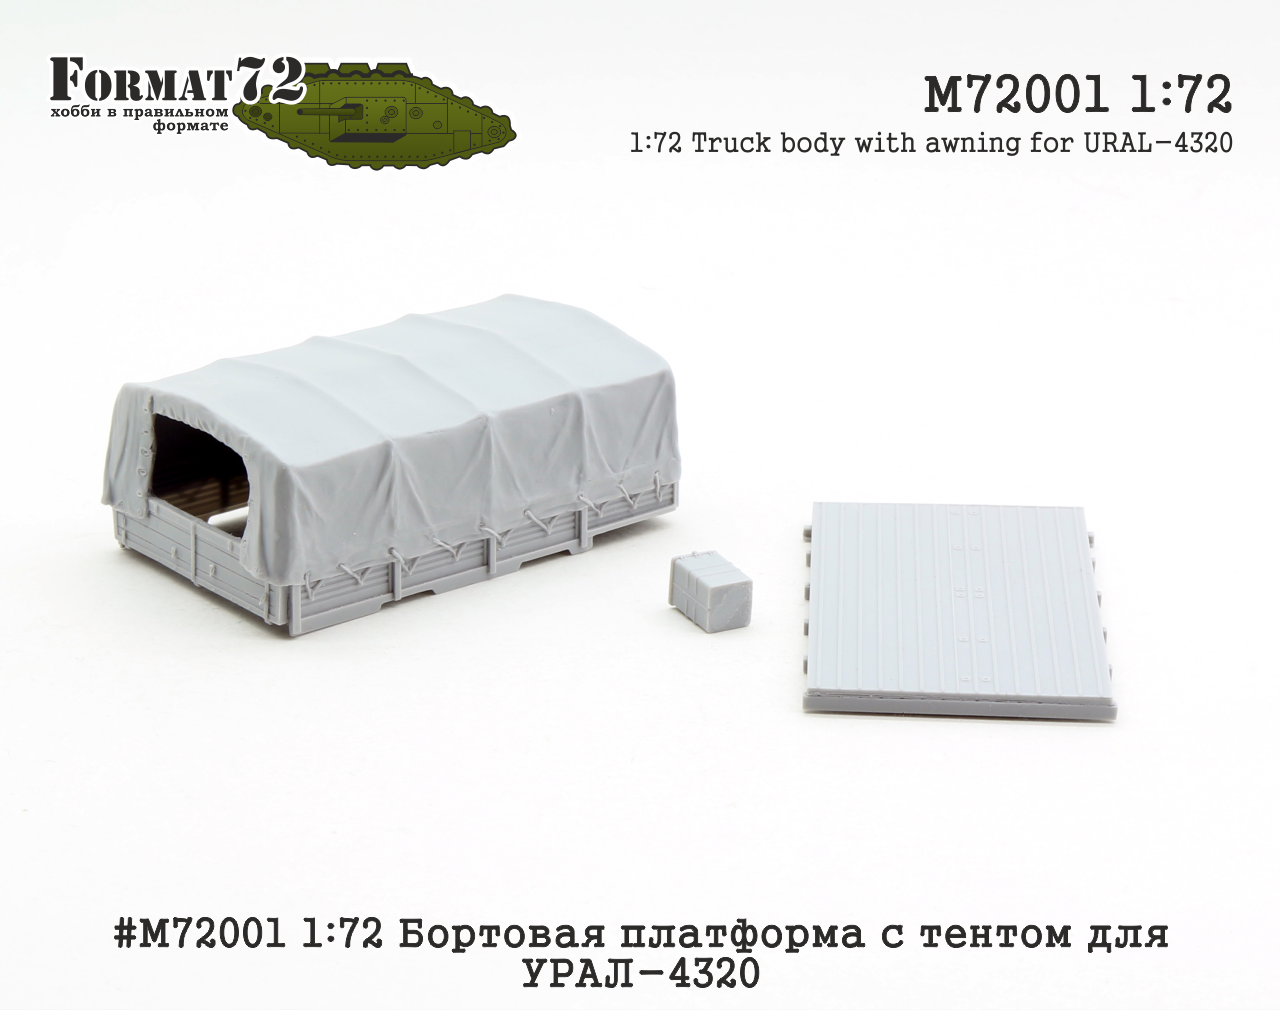 URAL-4320 bed wit tarp (ICM)